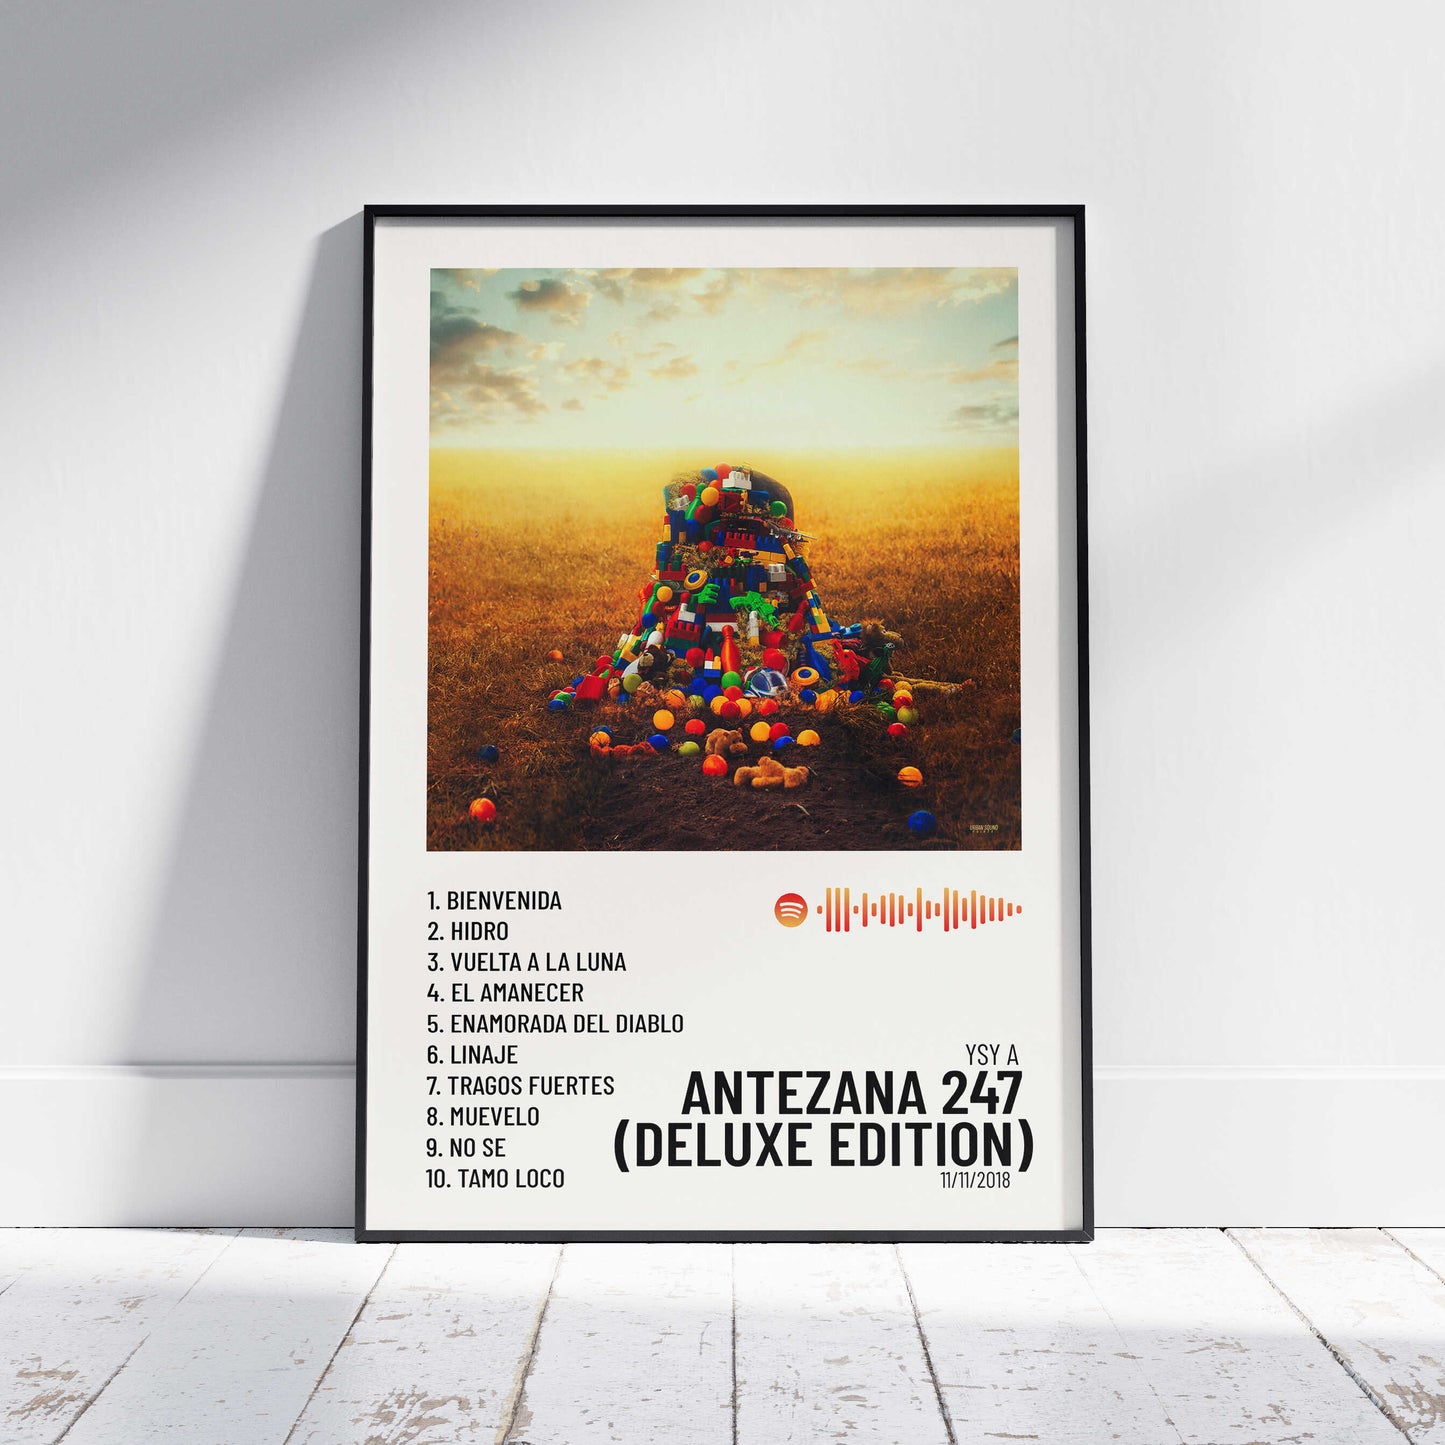 Antezana 247 (Deluxe Edition)